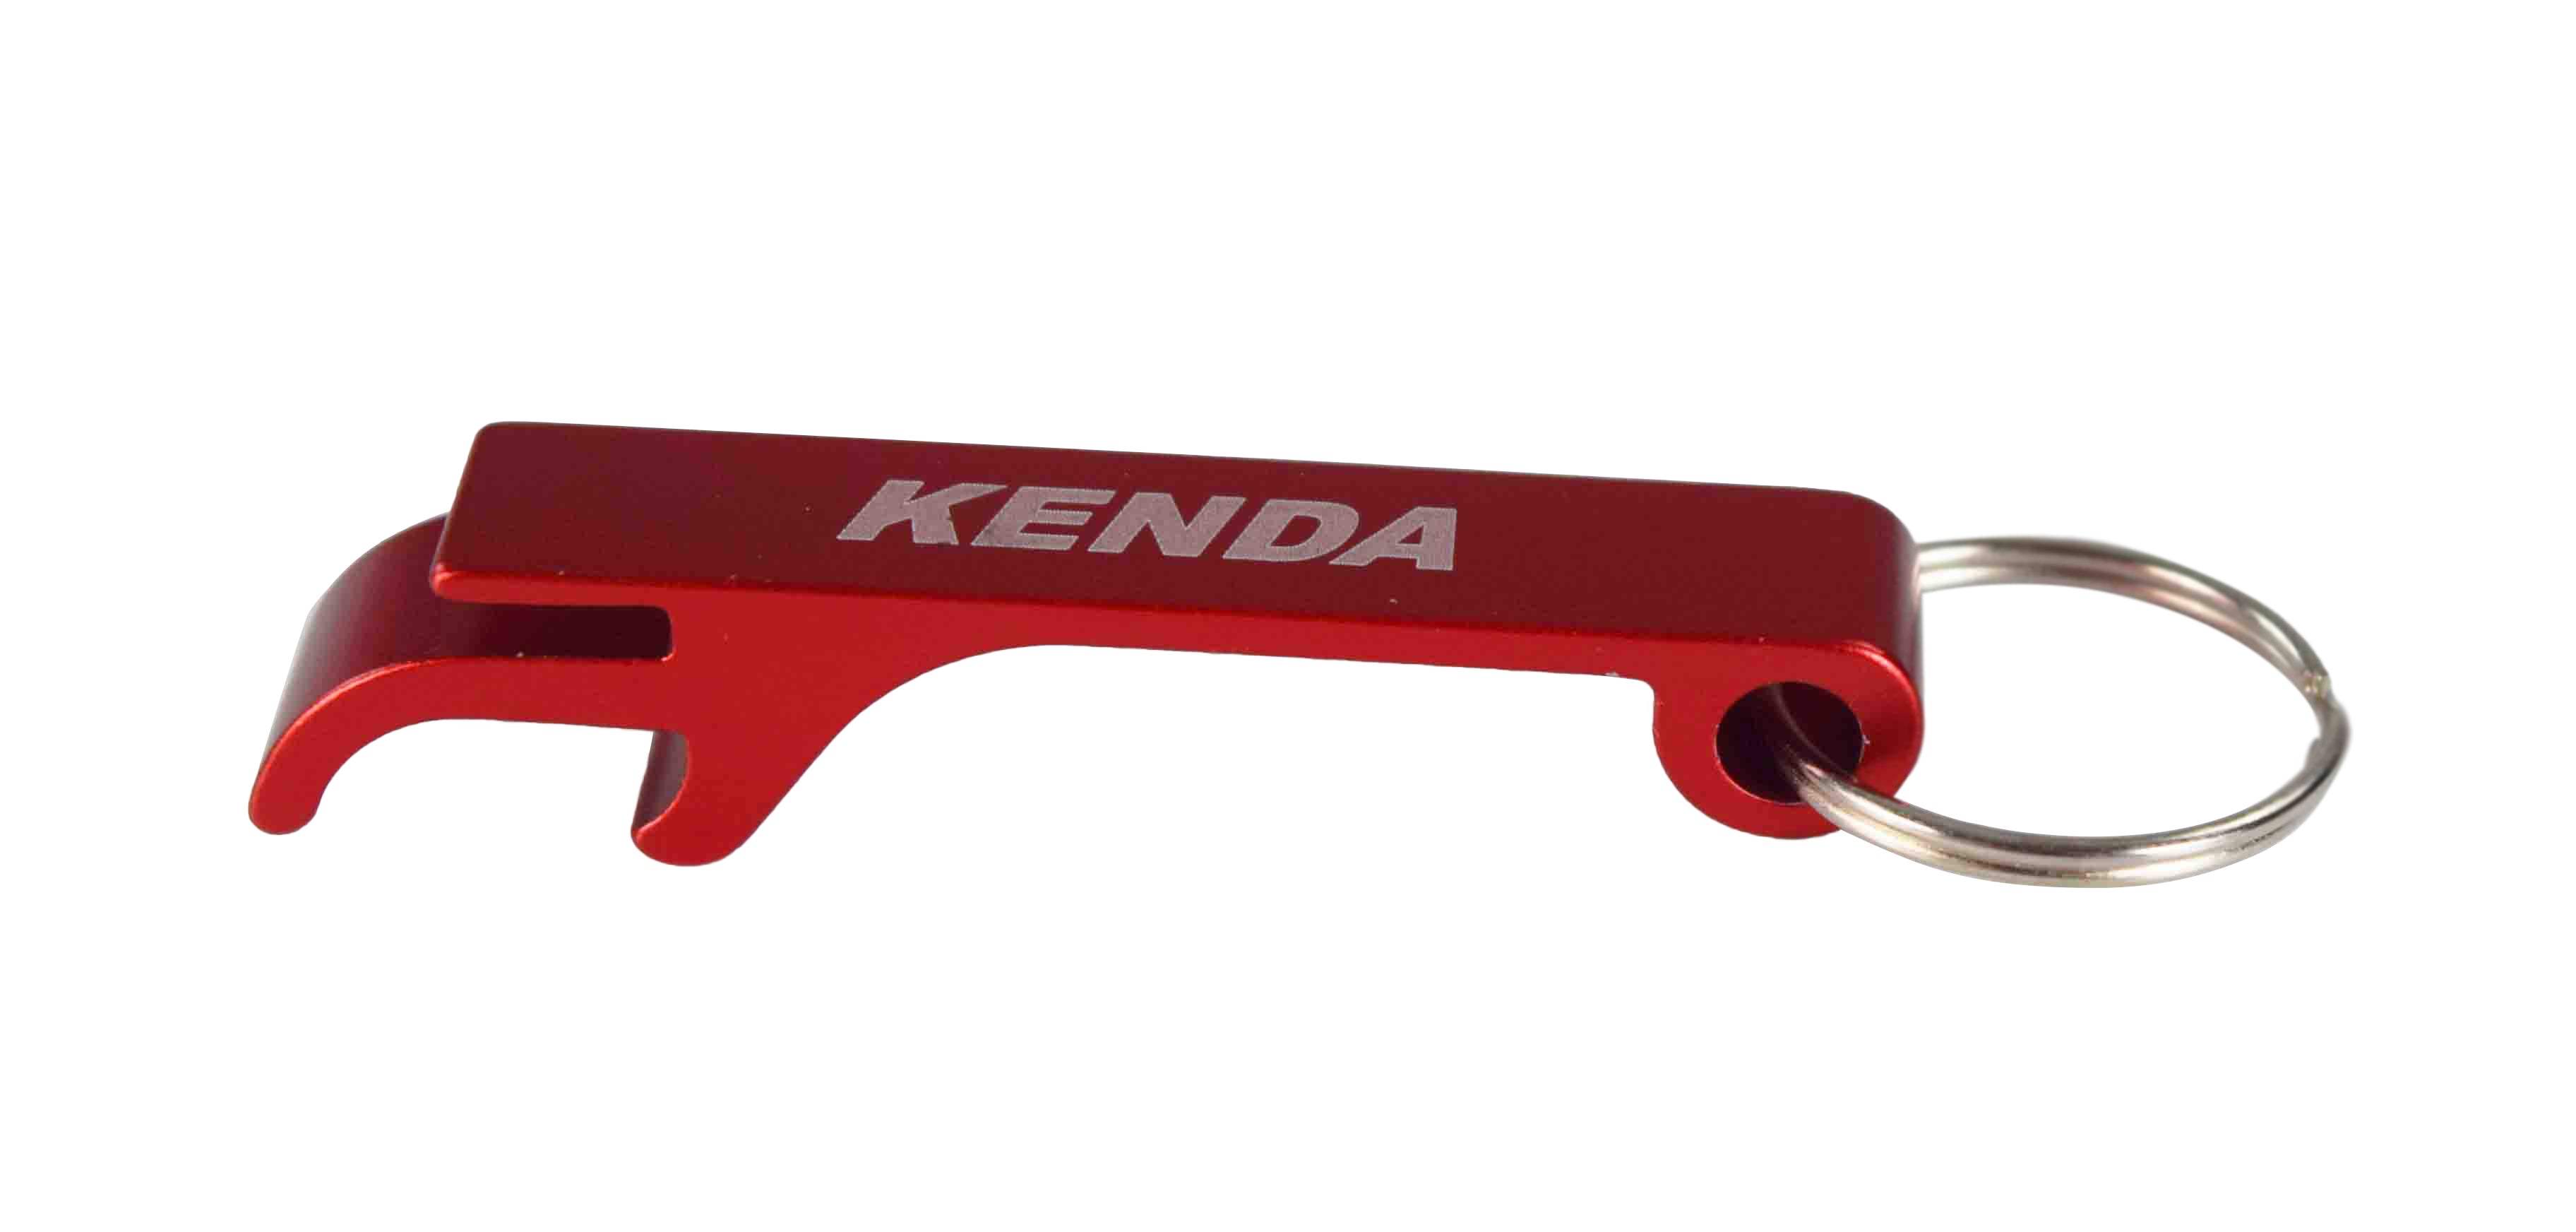 Kenda-277010N4-205-50-10-Pro-Tour-4-Ply-Tubeless-Golf-Cart-Tire-image-8